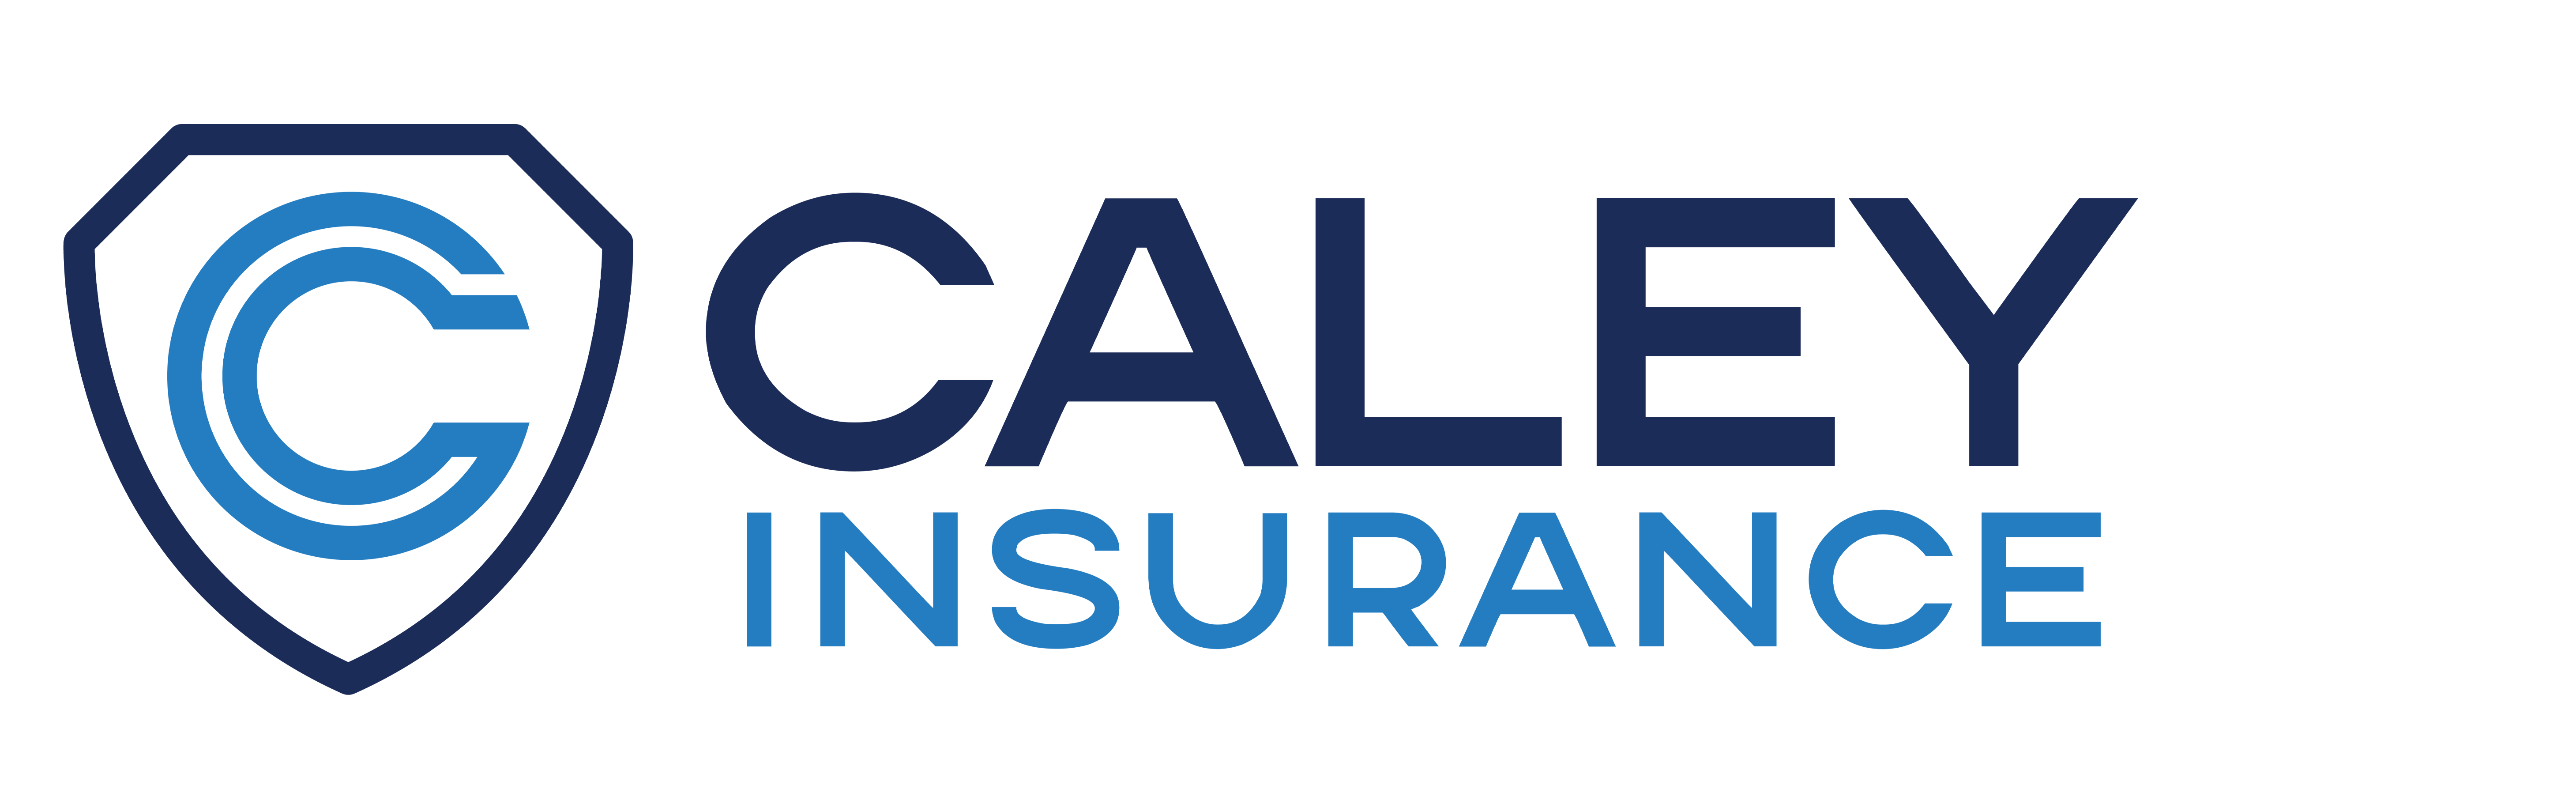 Caley Insurance